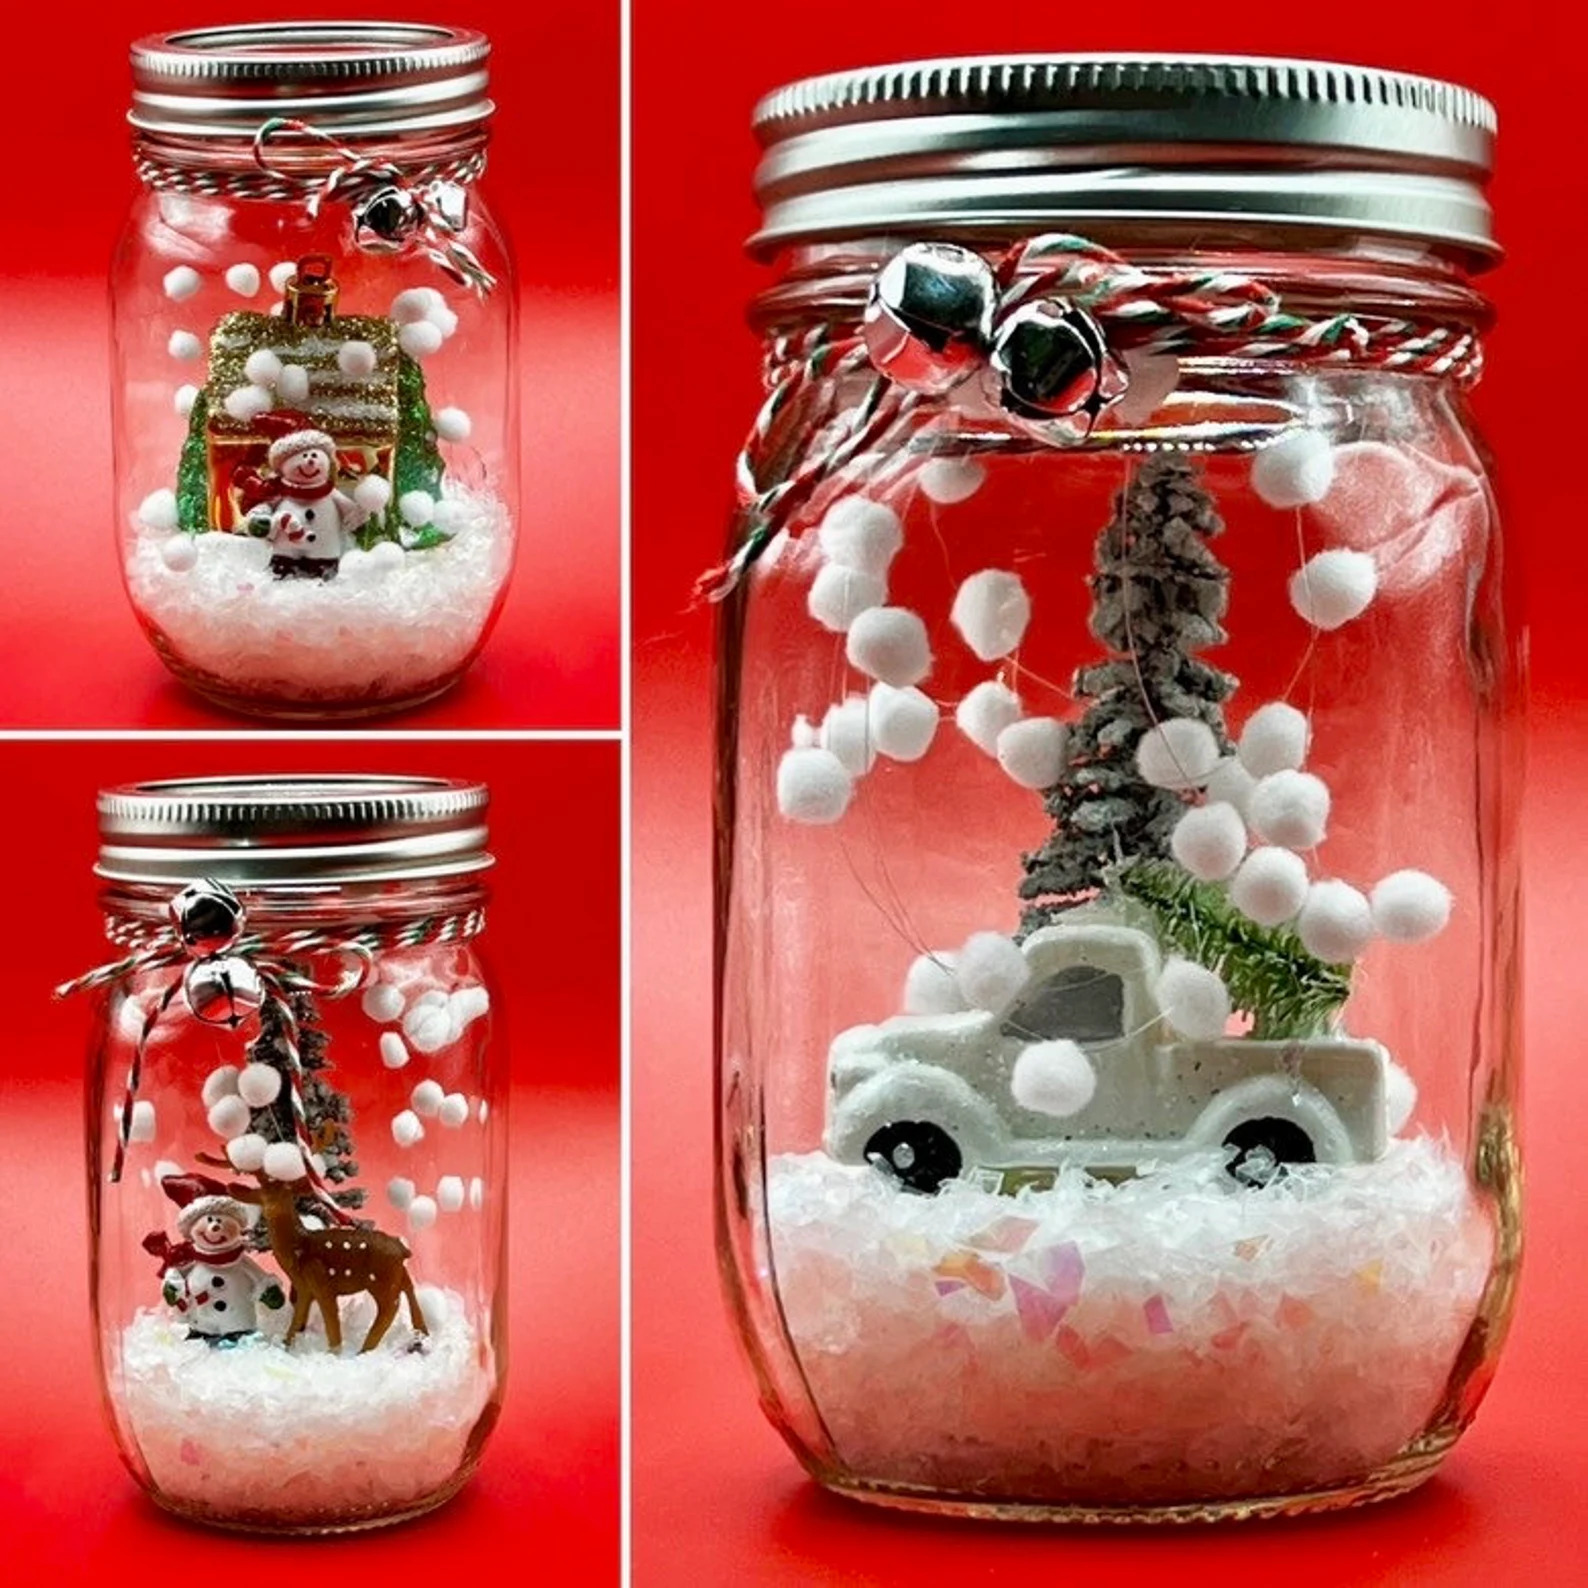 18 Fantastic Christmas Mason Jar Decorations For Your Table Décor